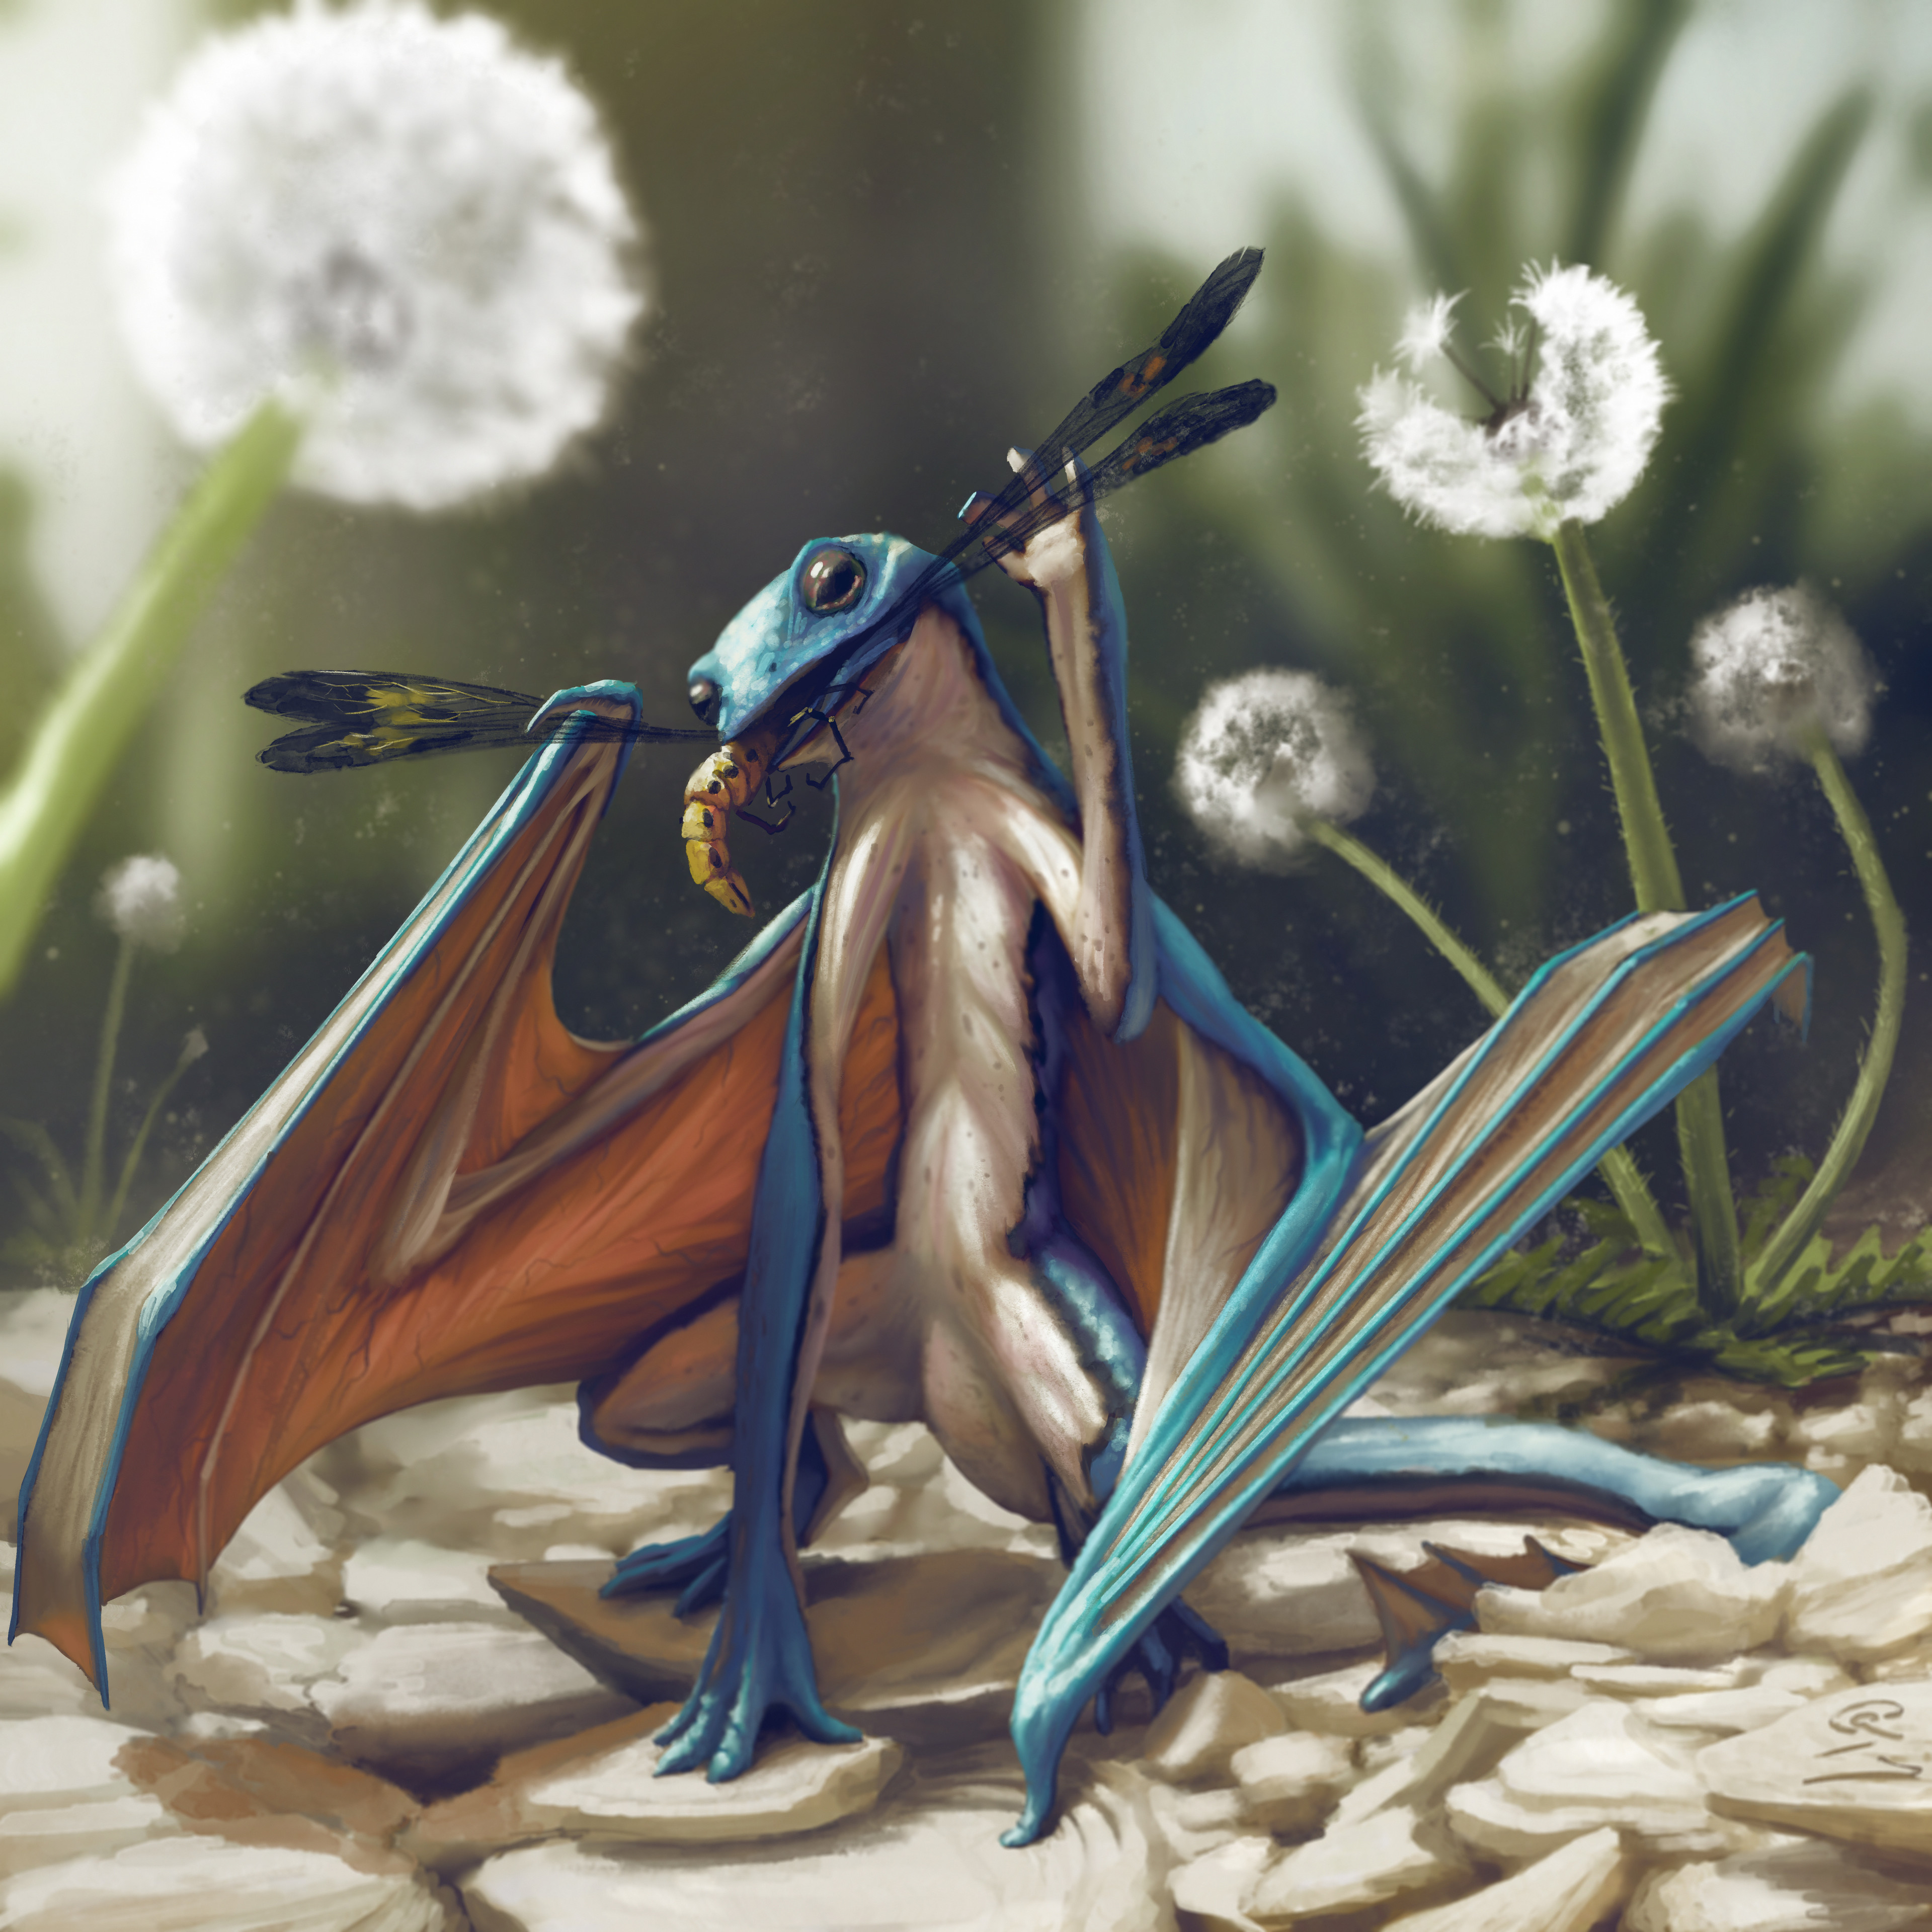 Lazulaki - a rare blue drake found in the Land of Light.